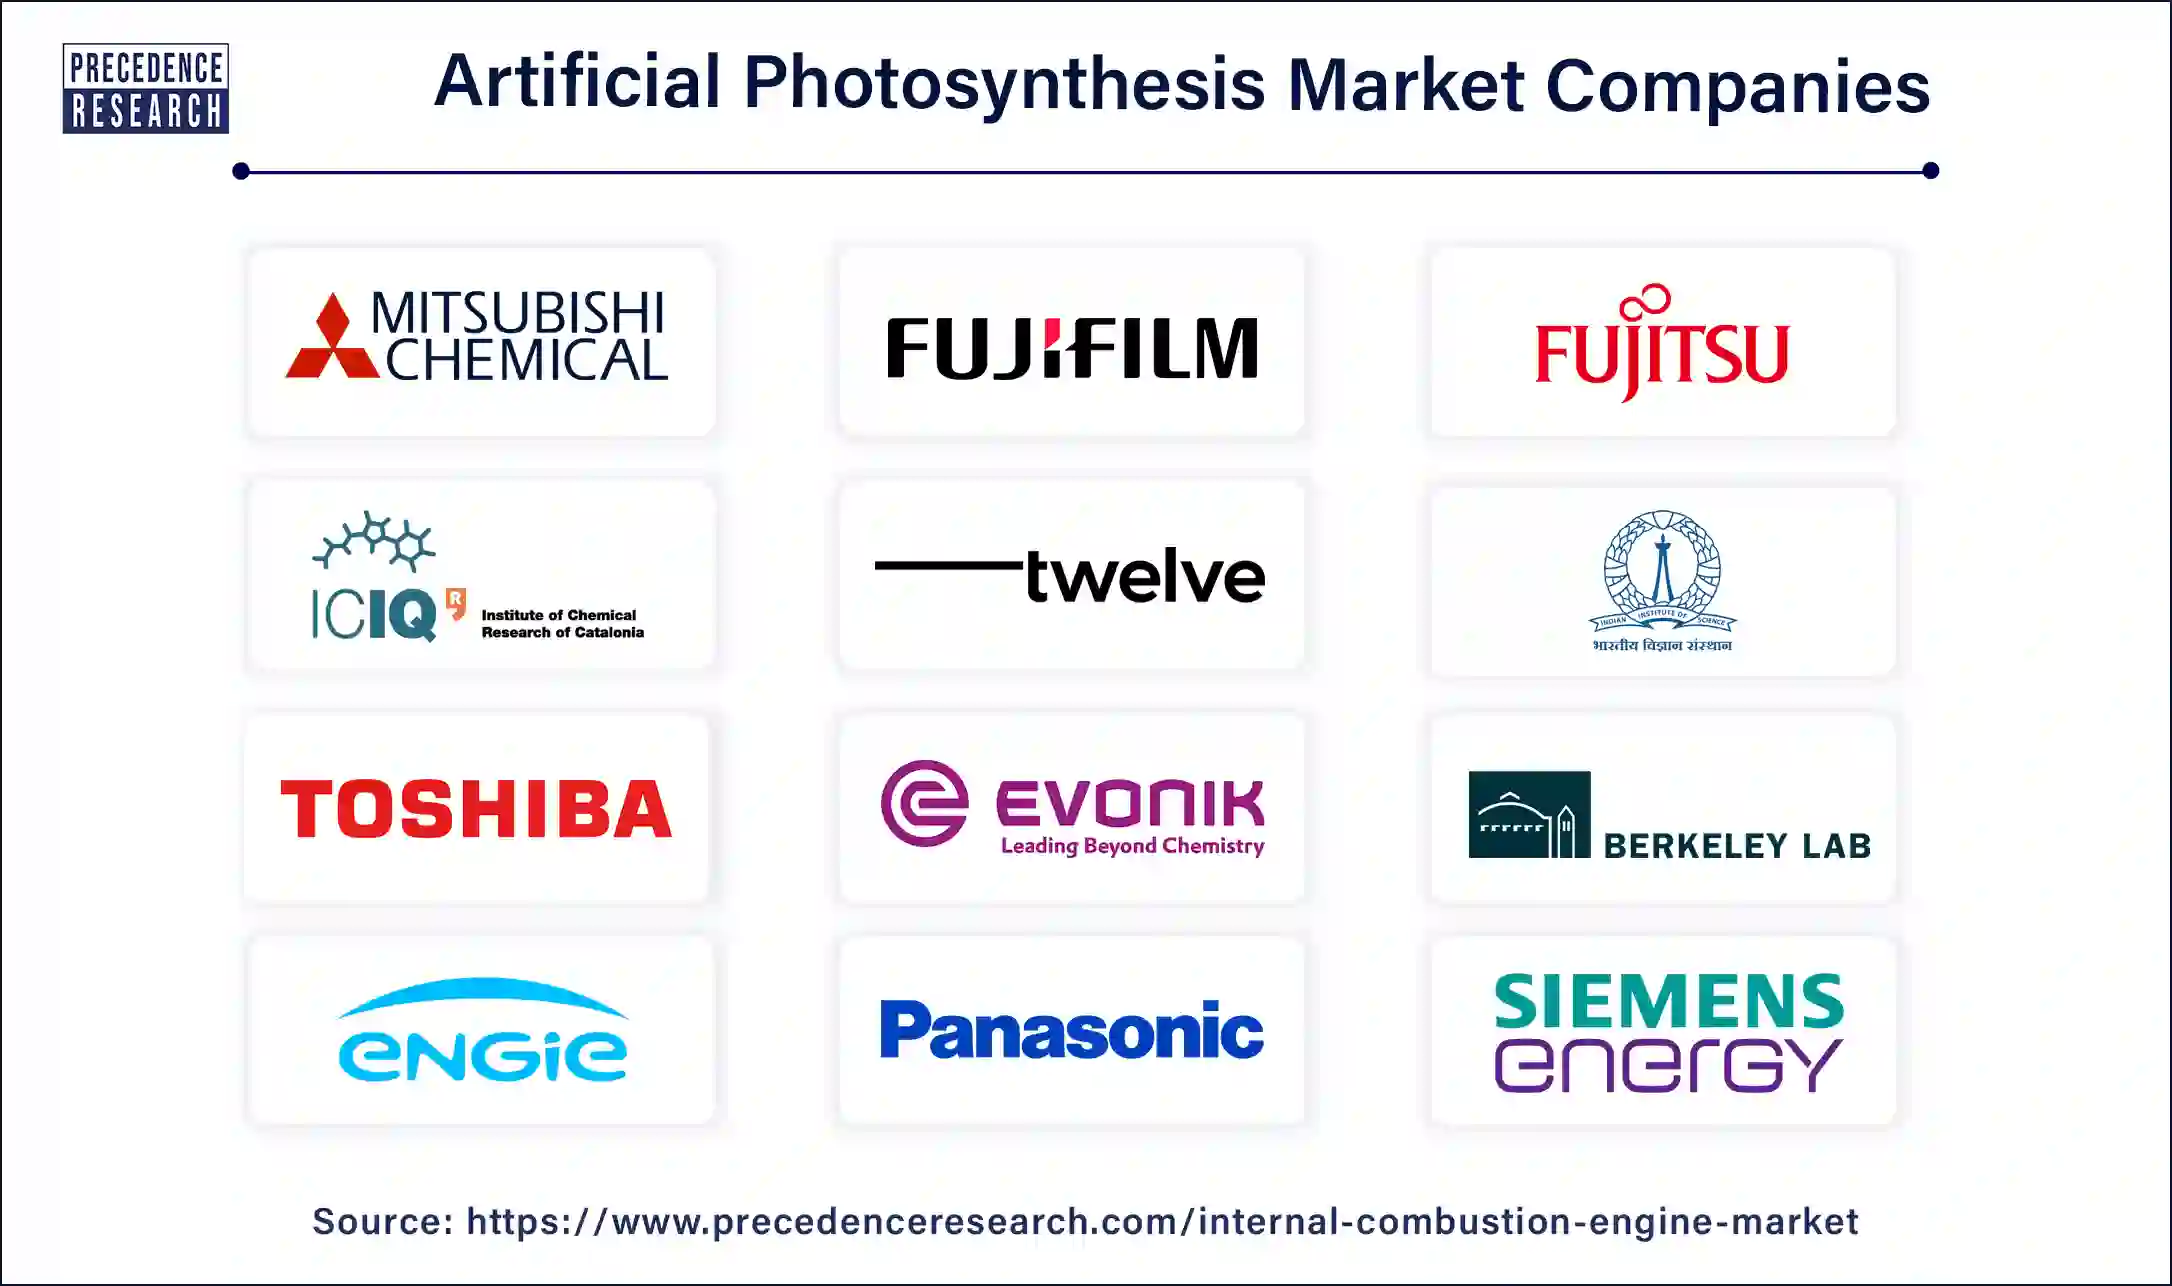 Artificial Photosynthesis Companies